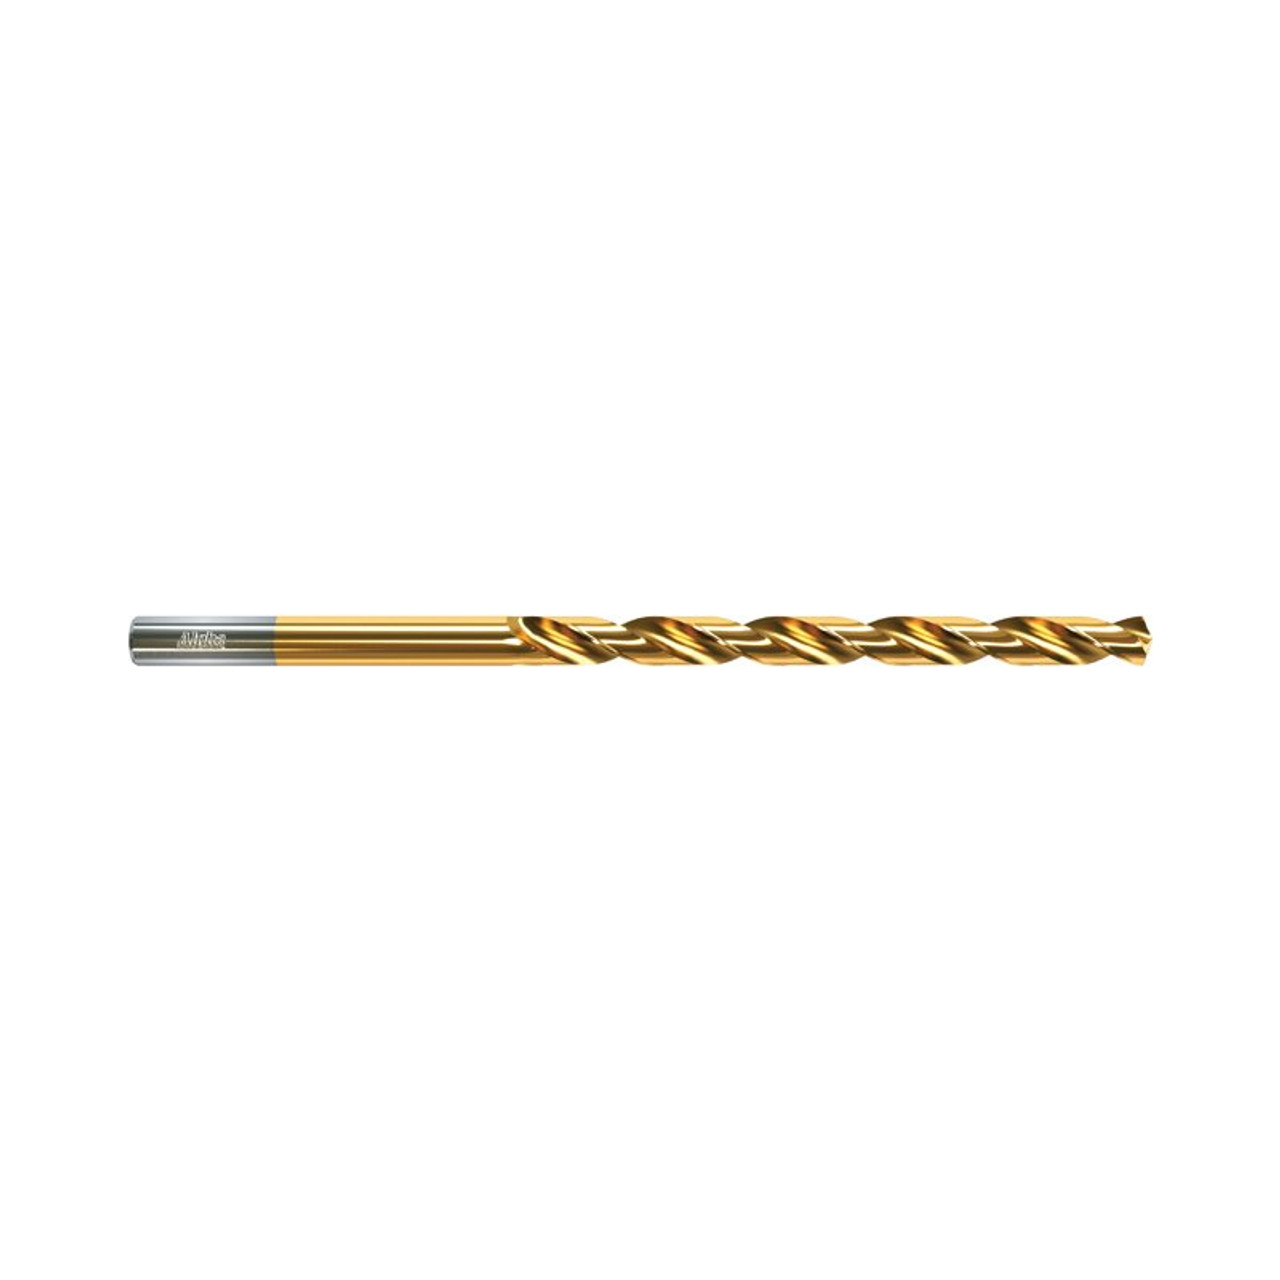 8.0Mm Long Series Drill Bit - Gold Series (Oal 165Mm)